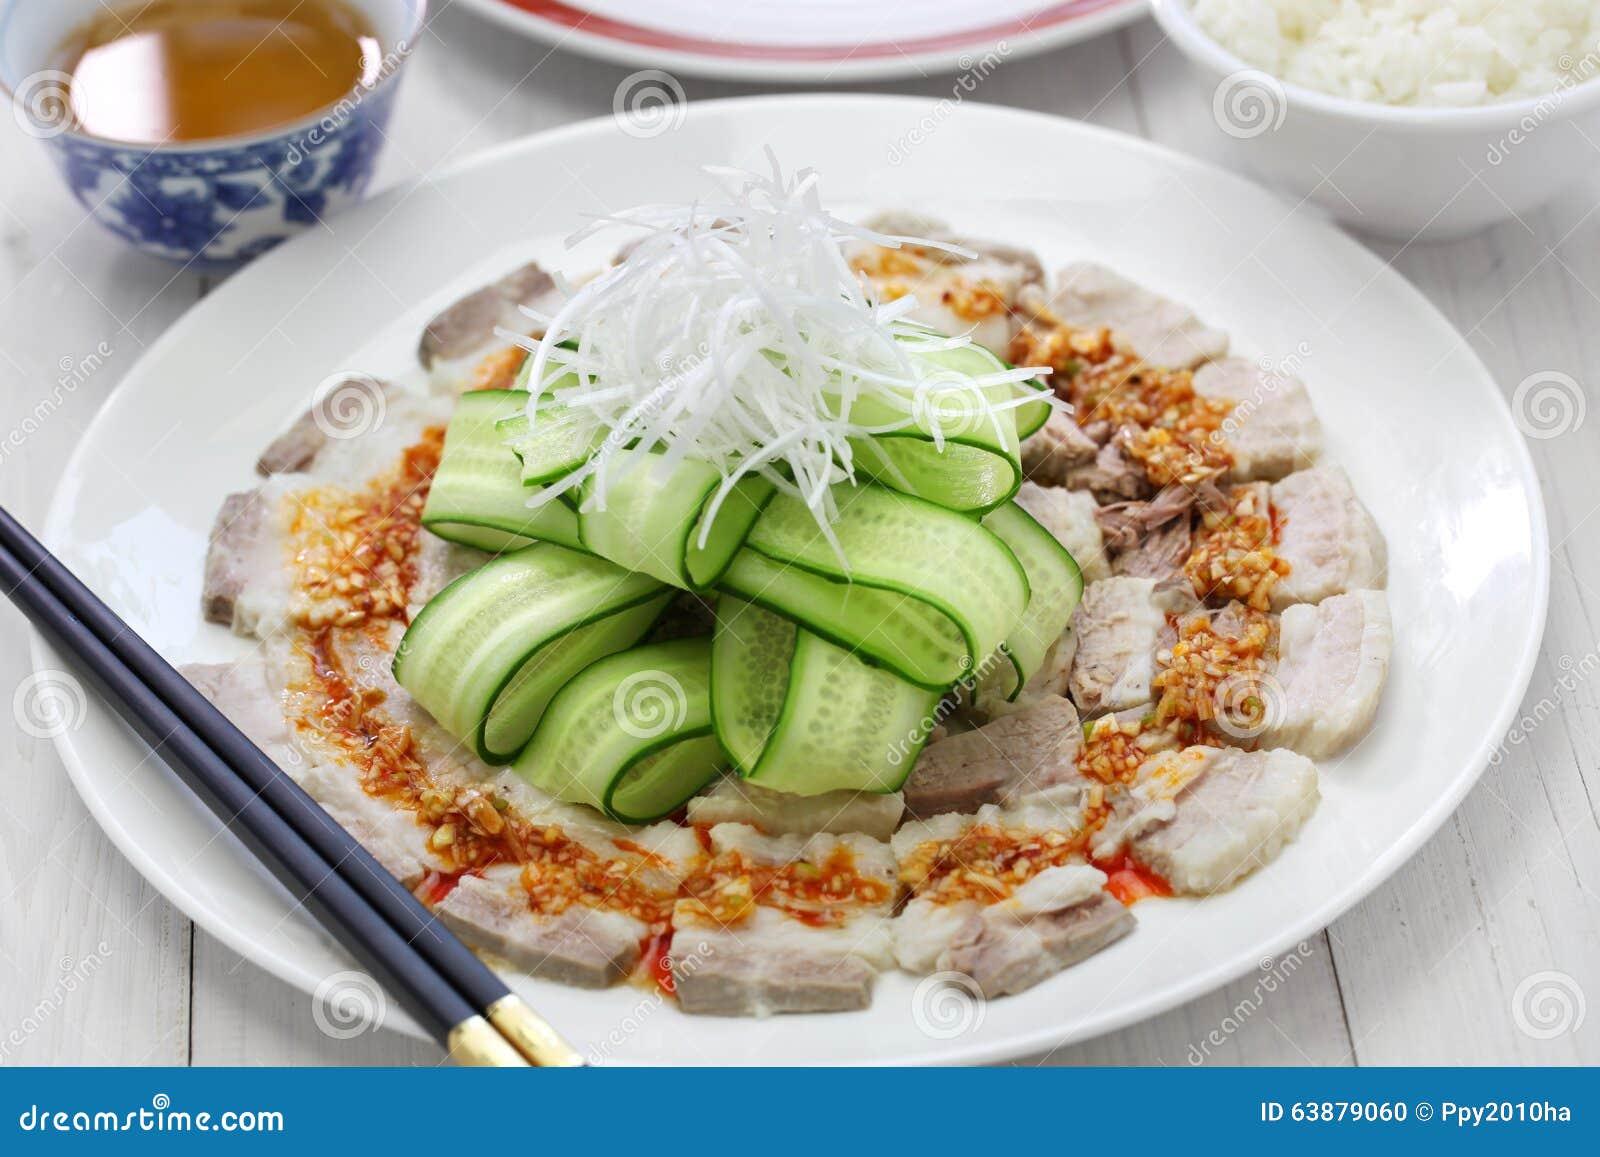 pork belly slices with spicy garlic sauce, sichuan cuisine